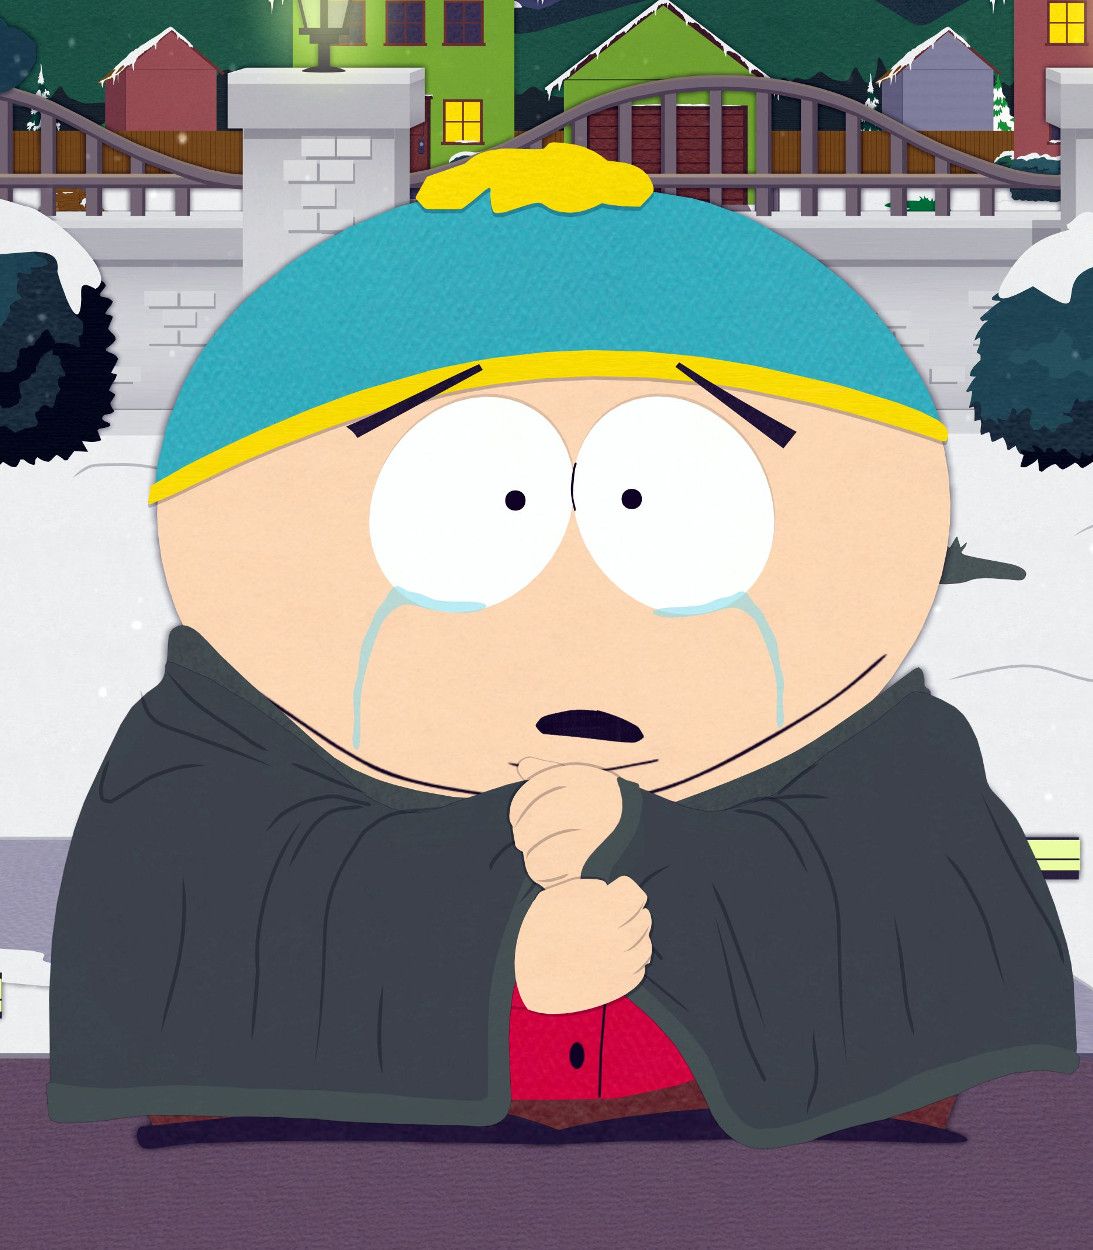 Eric Cartman in South Park